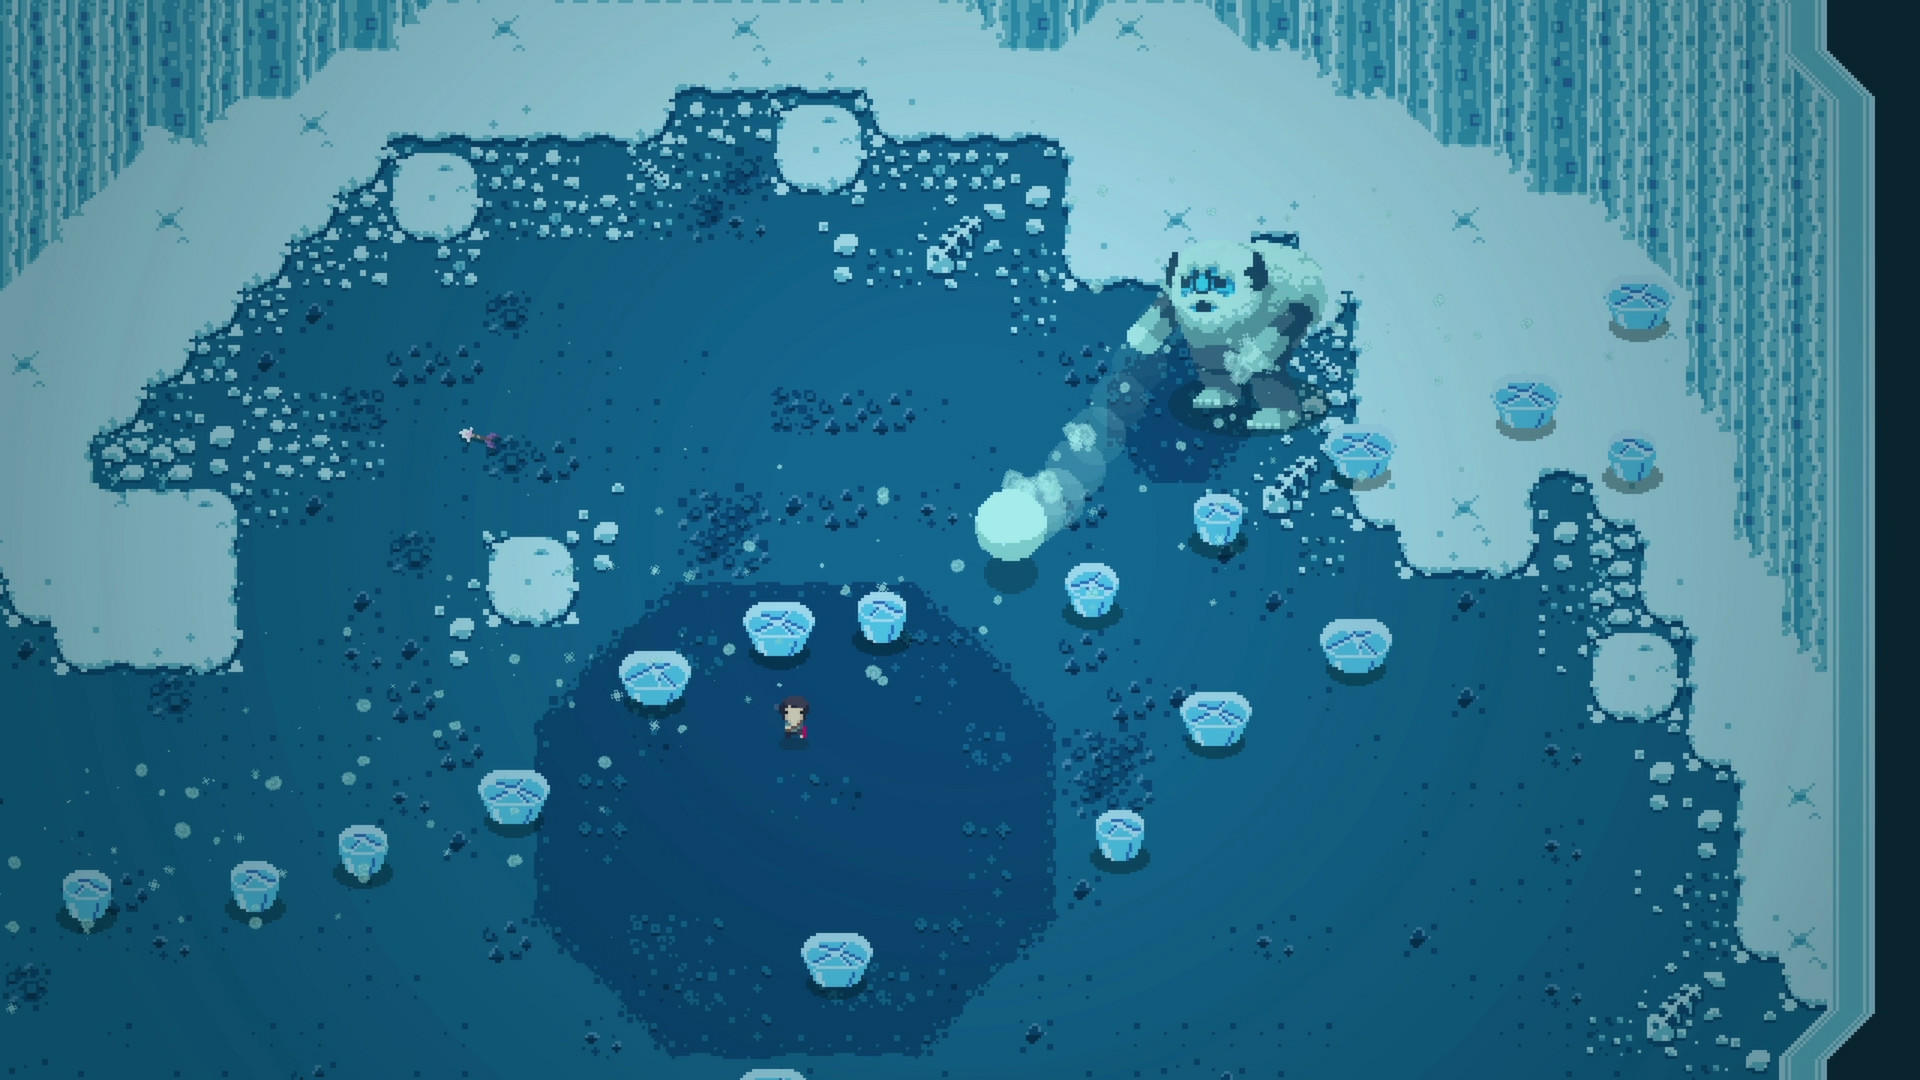 Titan Souls screenshot game